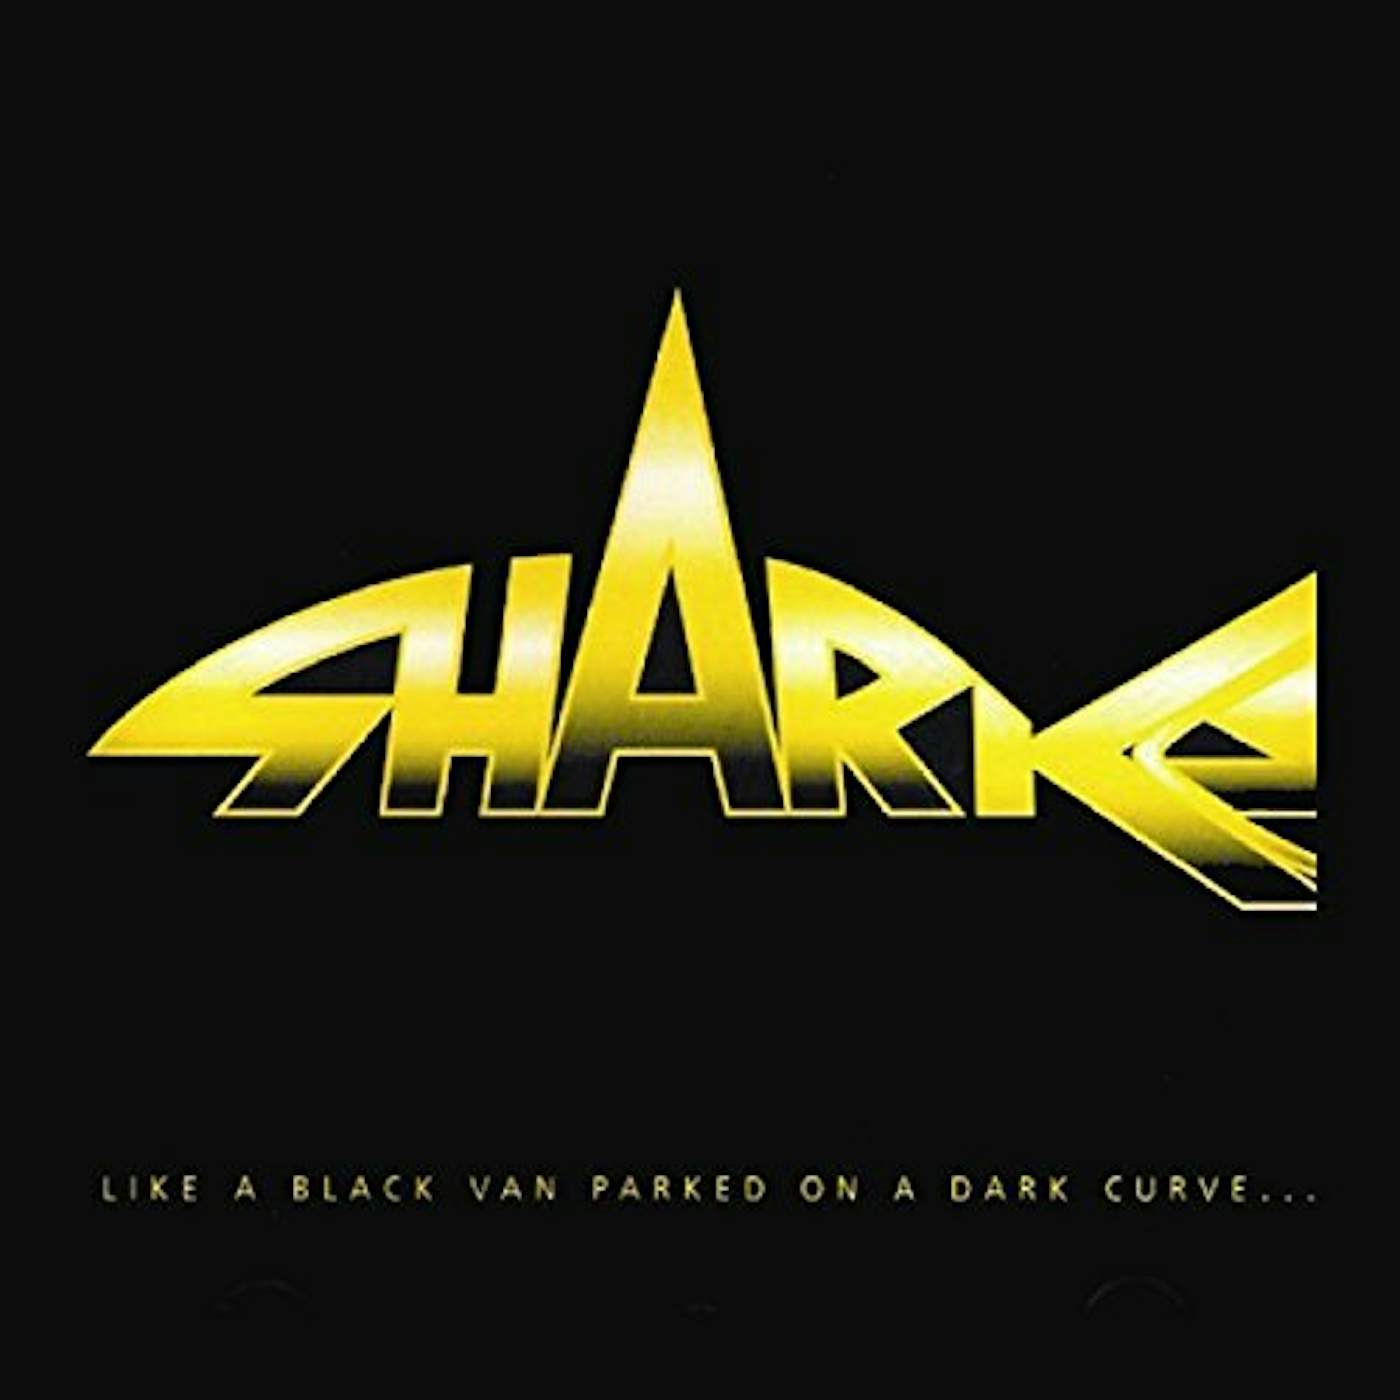 Sharks LIKE A BLACK VAN PARKED ON A DARK CURVE CD